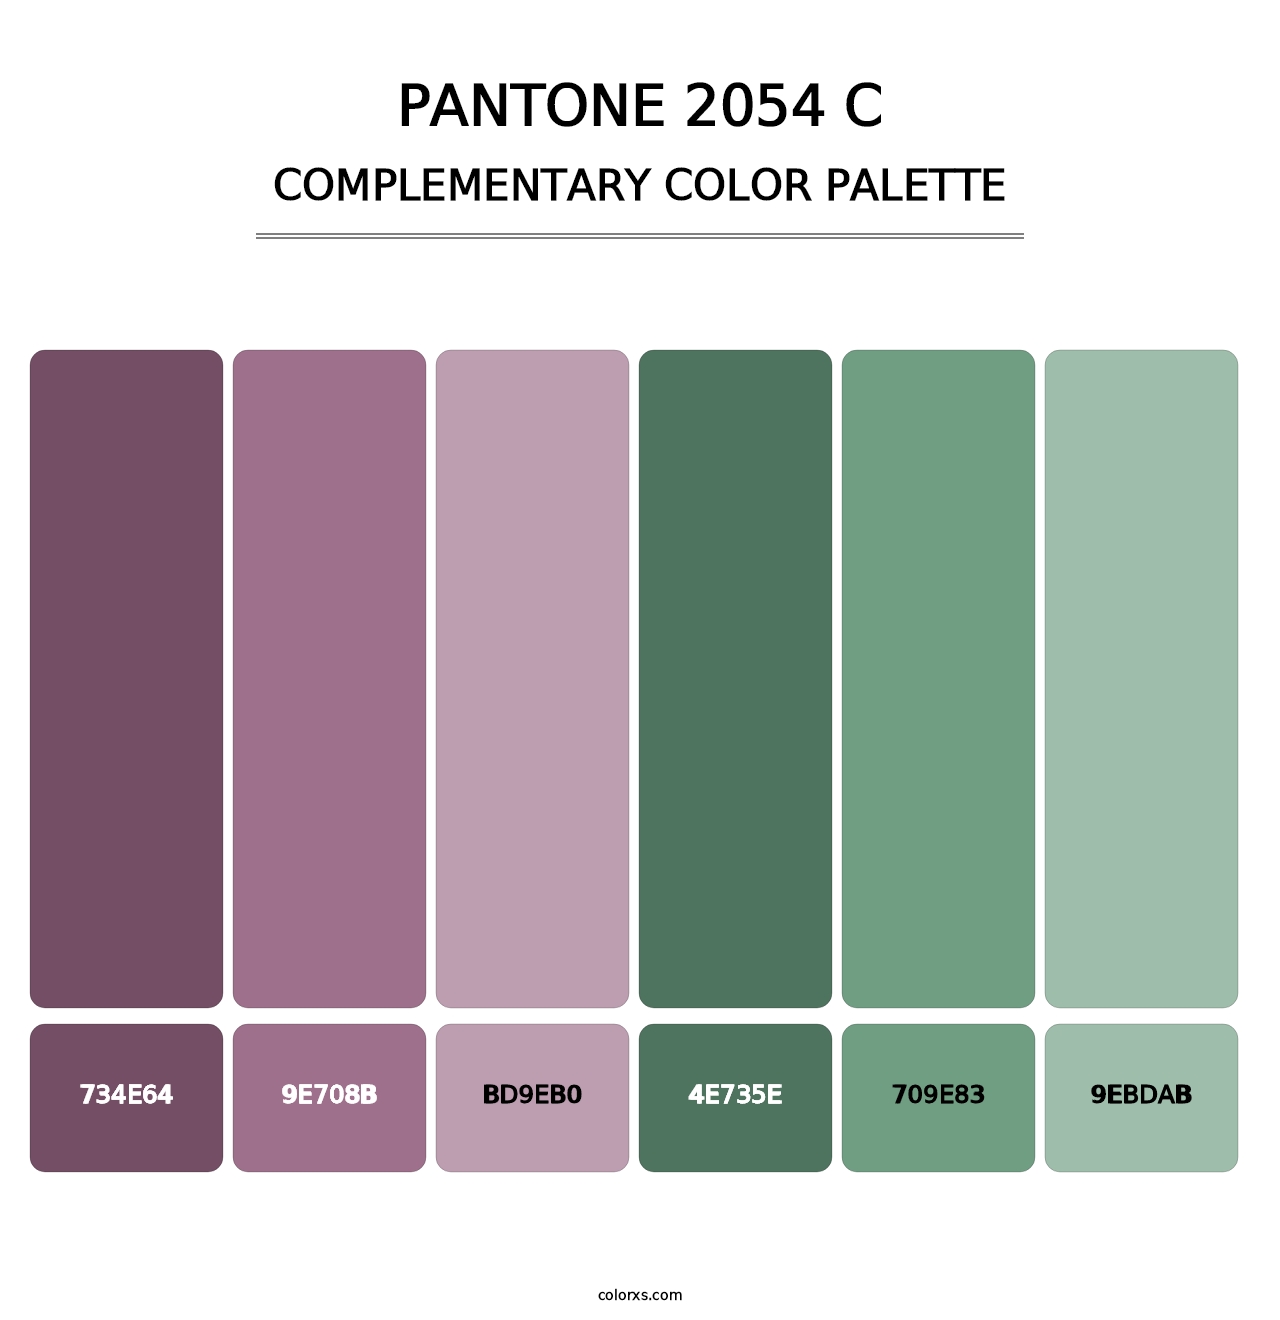 PANTONE 2054 C - Complementary Color Palette